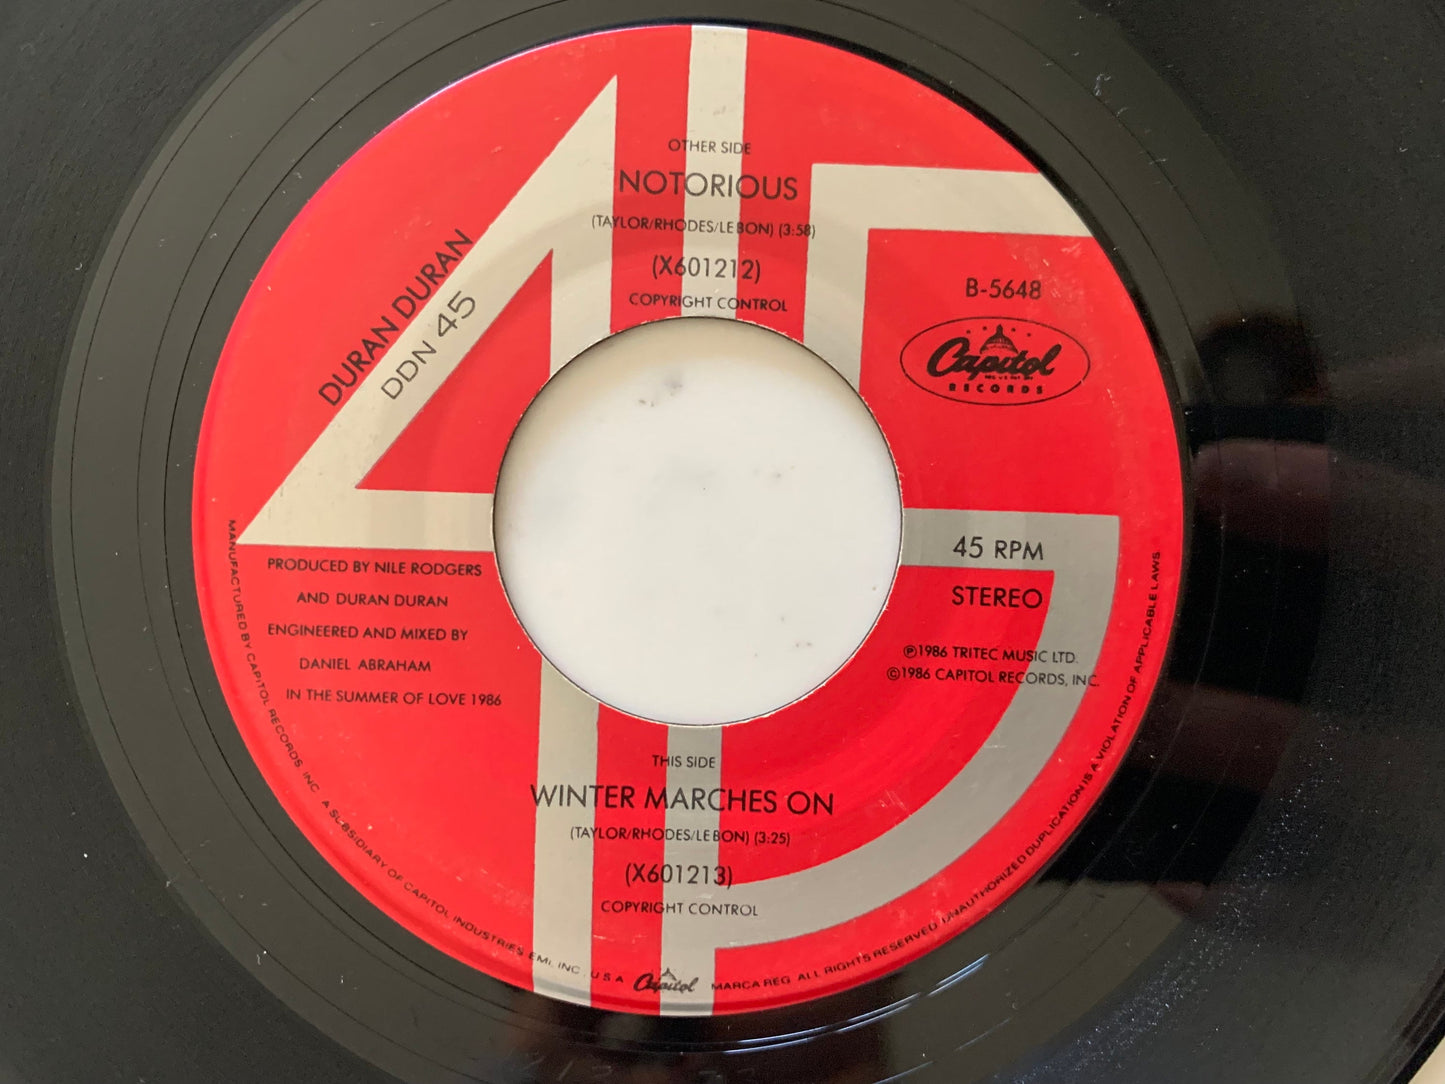 Duran Duran Notorious, Winter Marches On Capitol Records B-5648 Masterdisk Original Duran Duran 7" records, 1980's Synth Pop Music 45 RPM